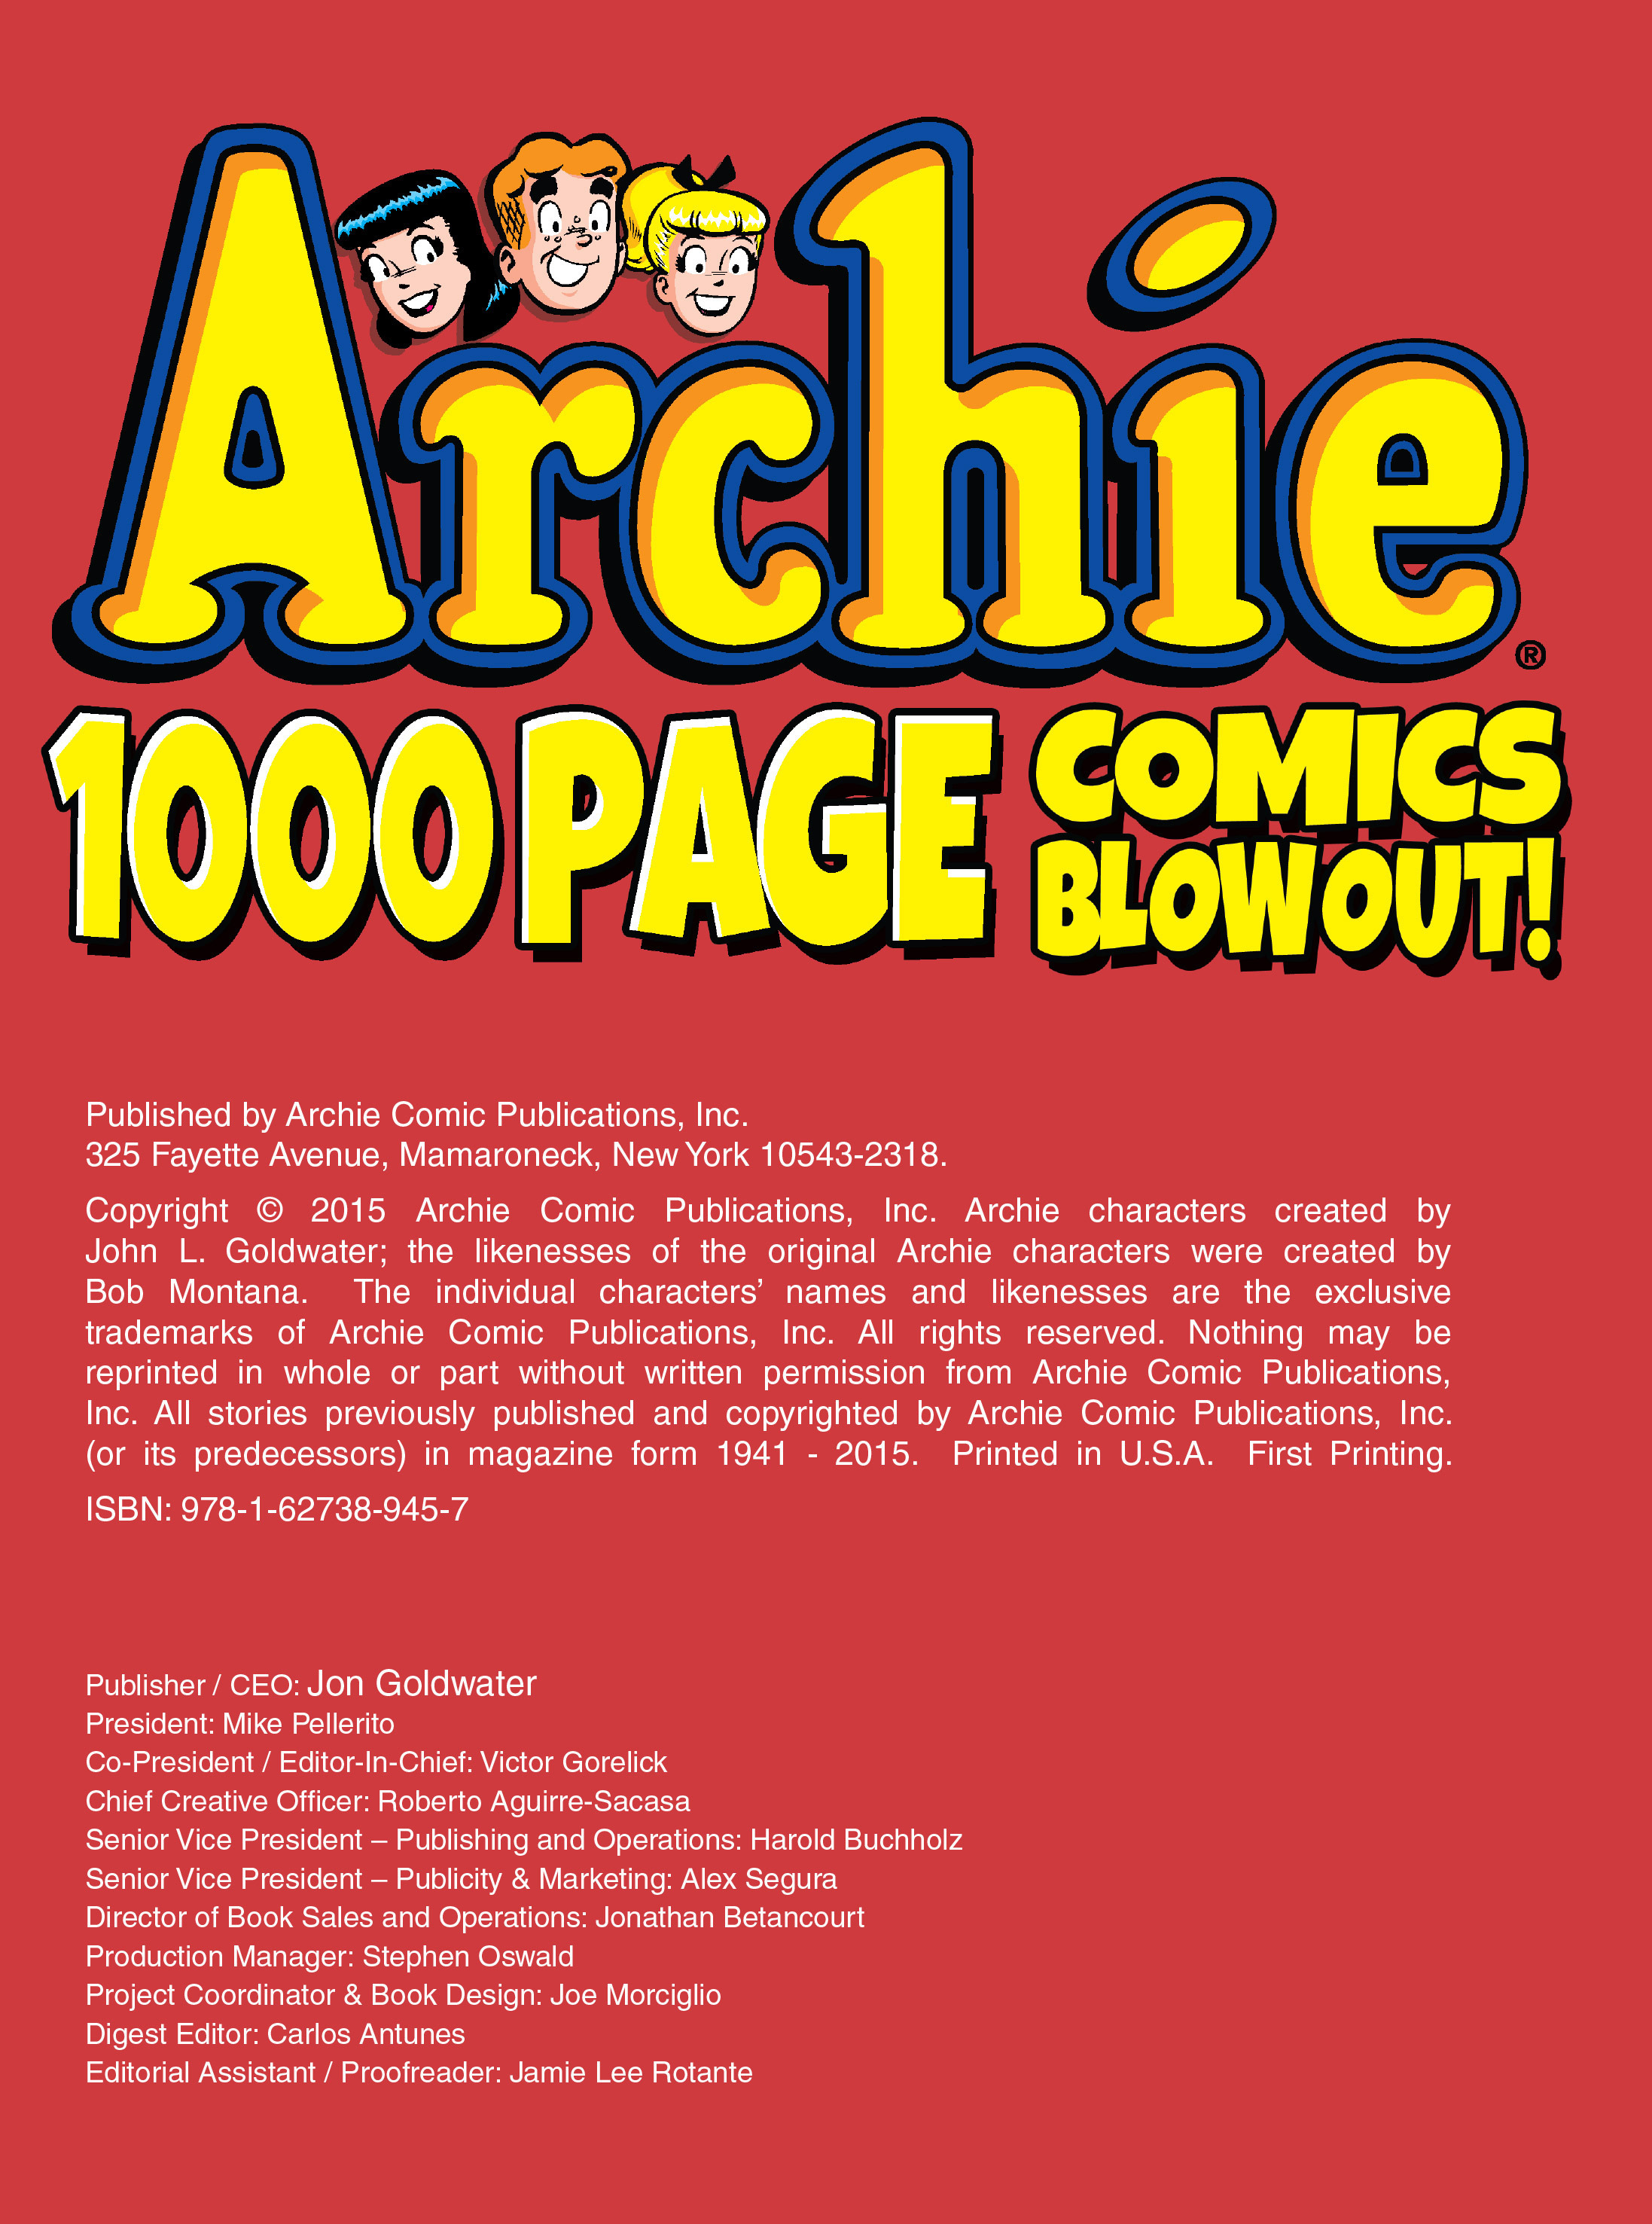 Read online Archie 1000 Page Comics Blowout! comic -  Issue # TPB (Part 1) - 2